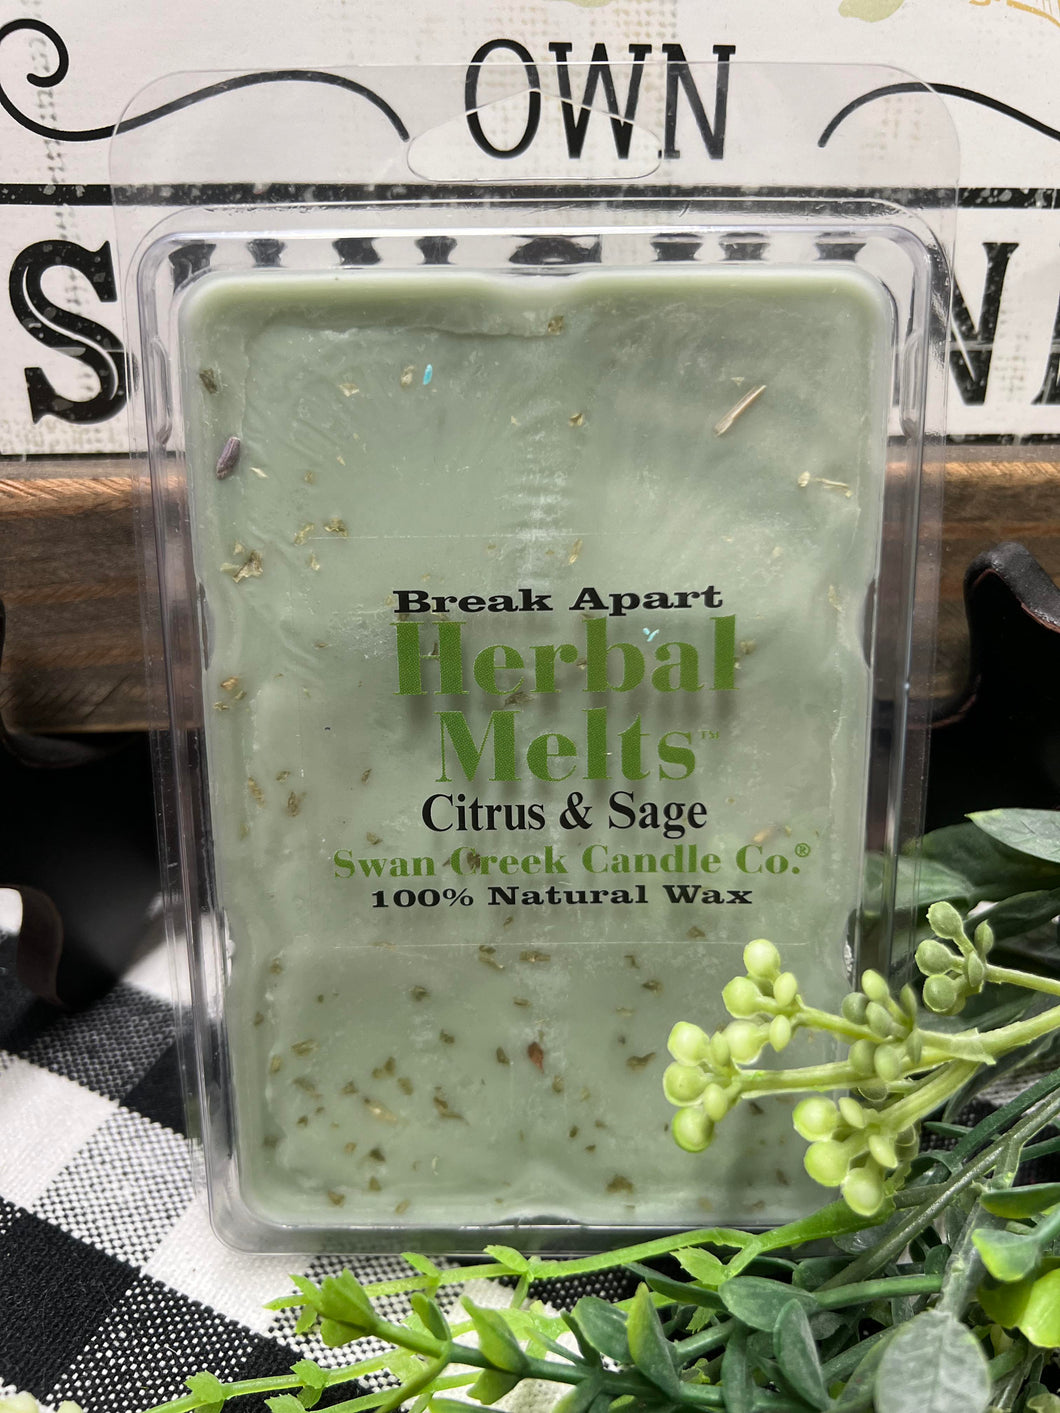 Swan Creek Candle Co. Citrus & Sage Herbal Melts